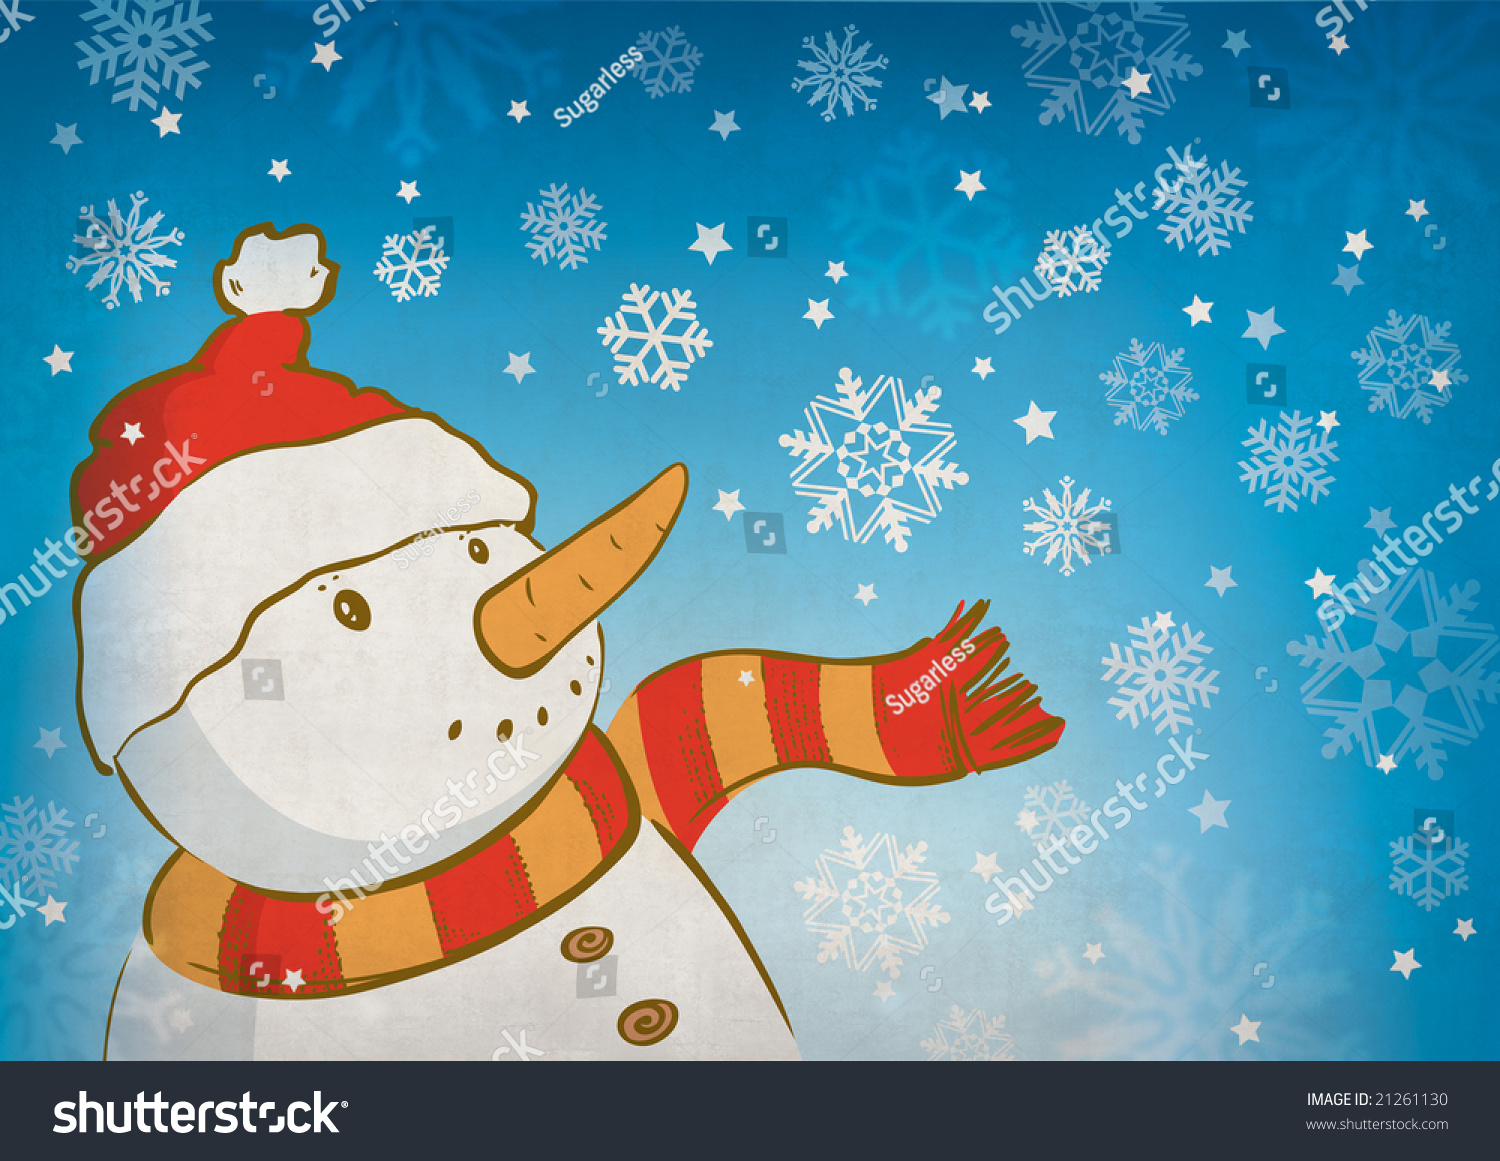 Snowman Surrounding Snowflakes Stock Photo 21261130 : Shutterstock